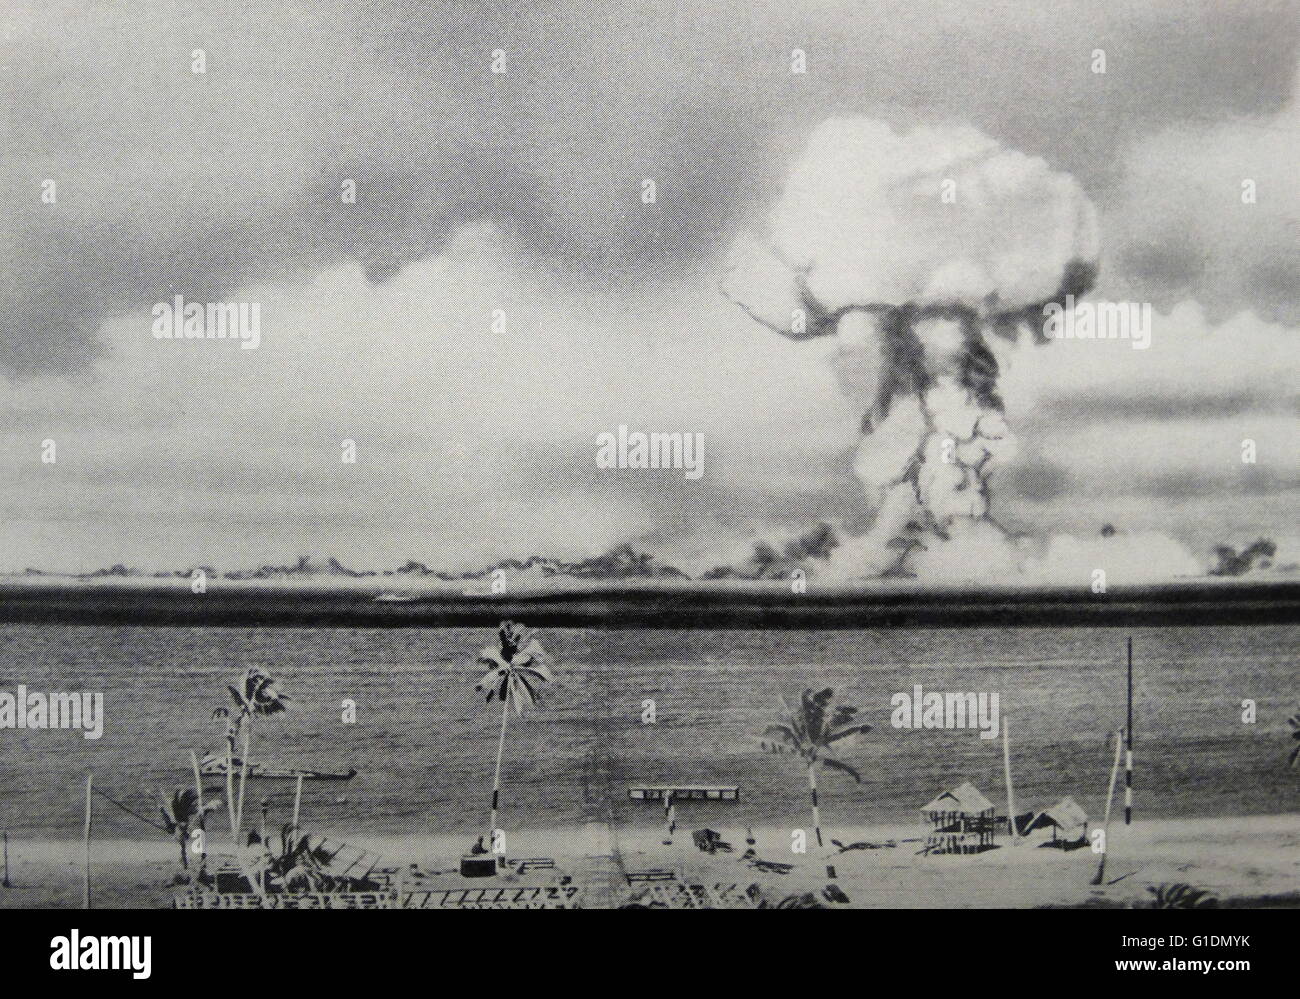 Bikini Atoll Bomb High Resolution Stock Photography and Images - Alamy